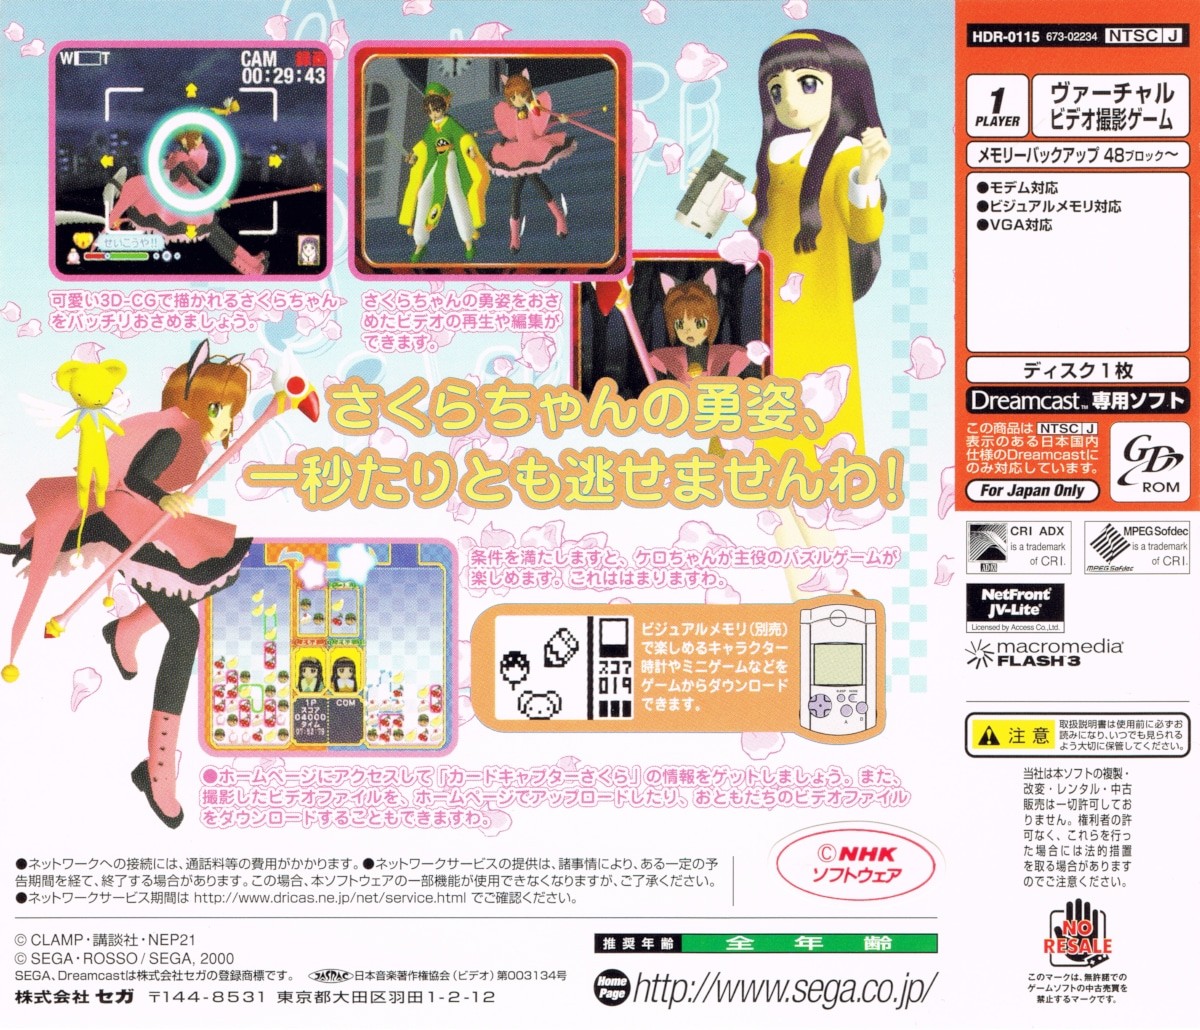 Capa do jogo Cardcaptor Sakura: Tomoyo no Video Daisakusen